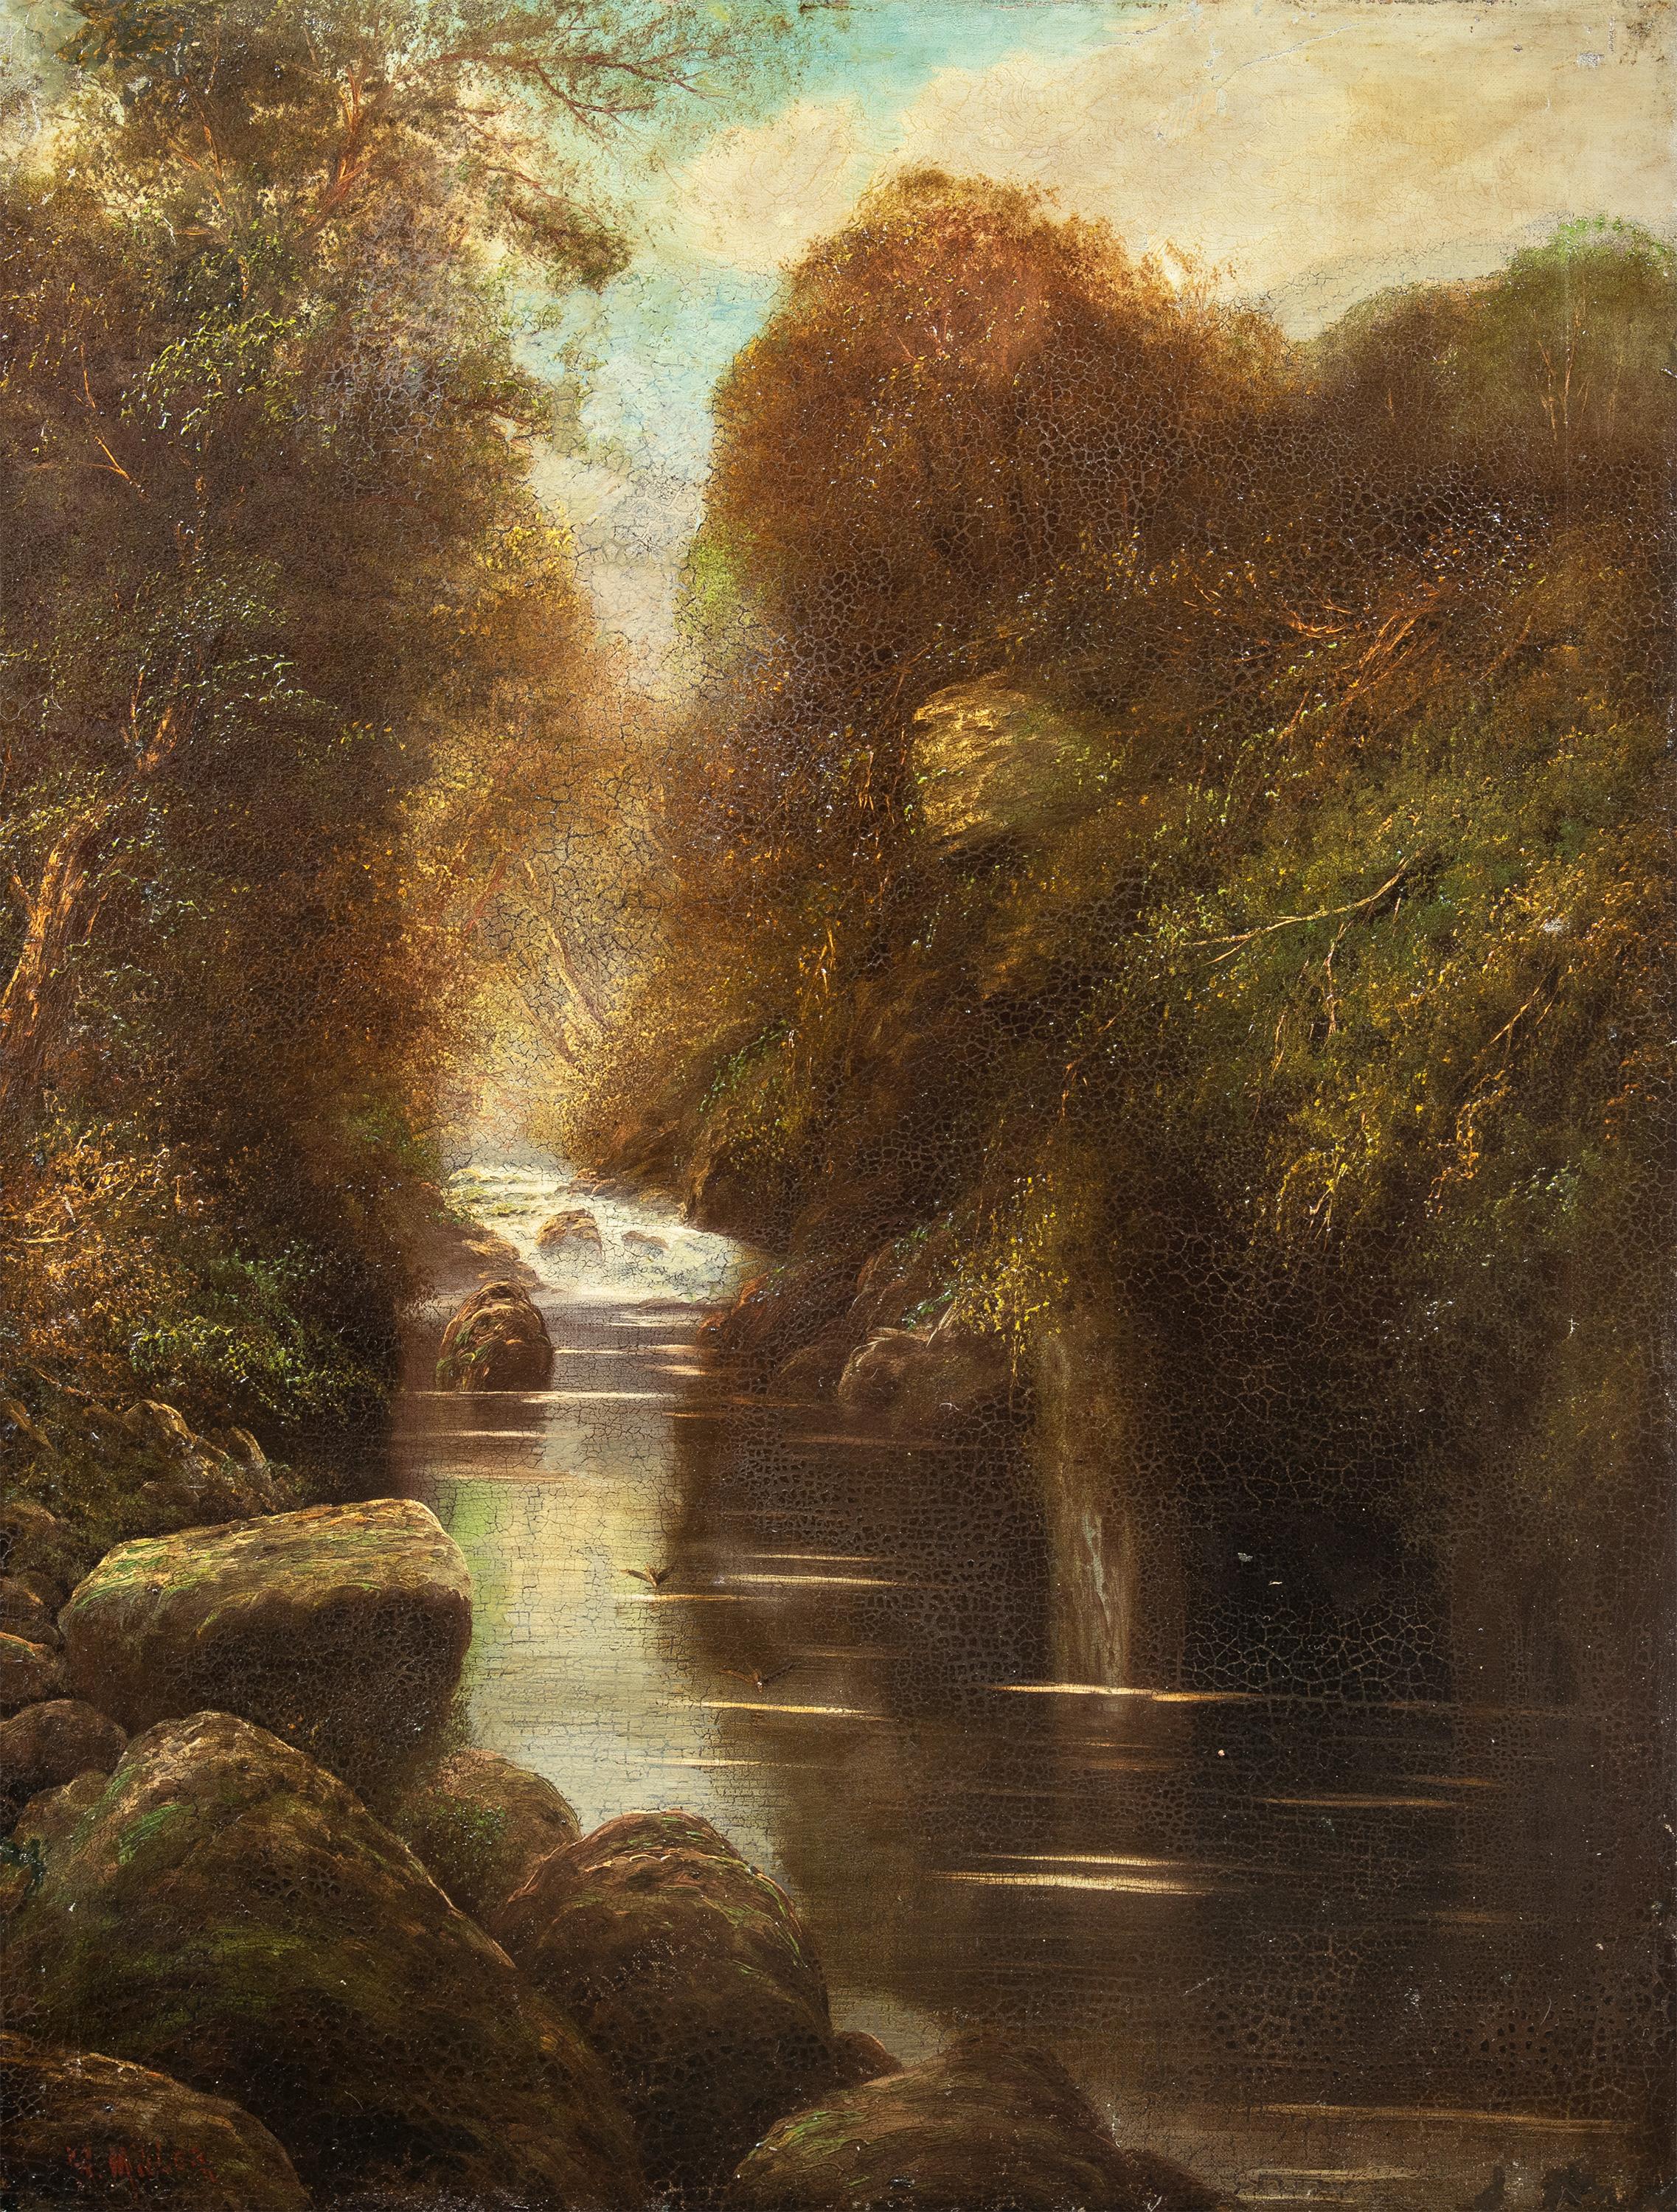 19th century english painter william